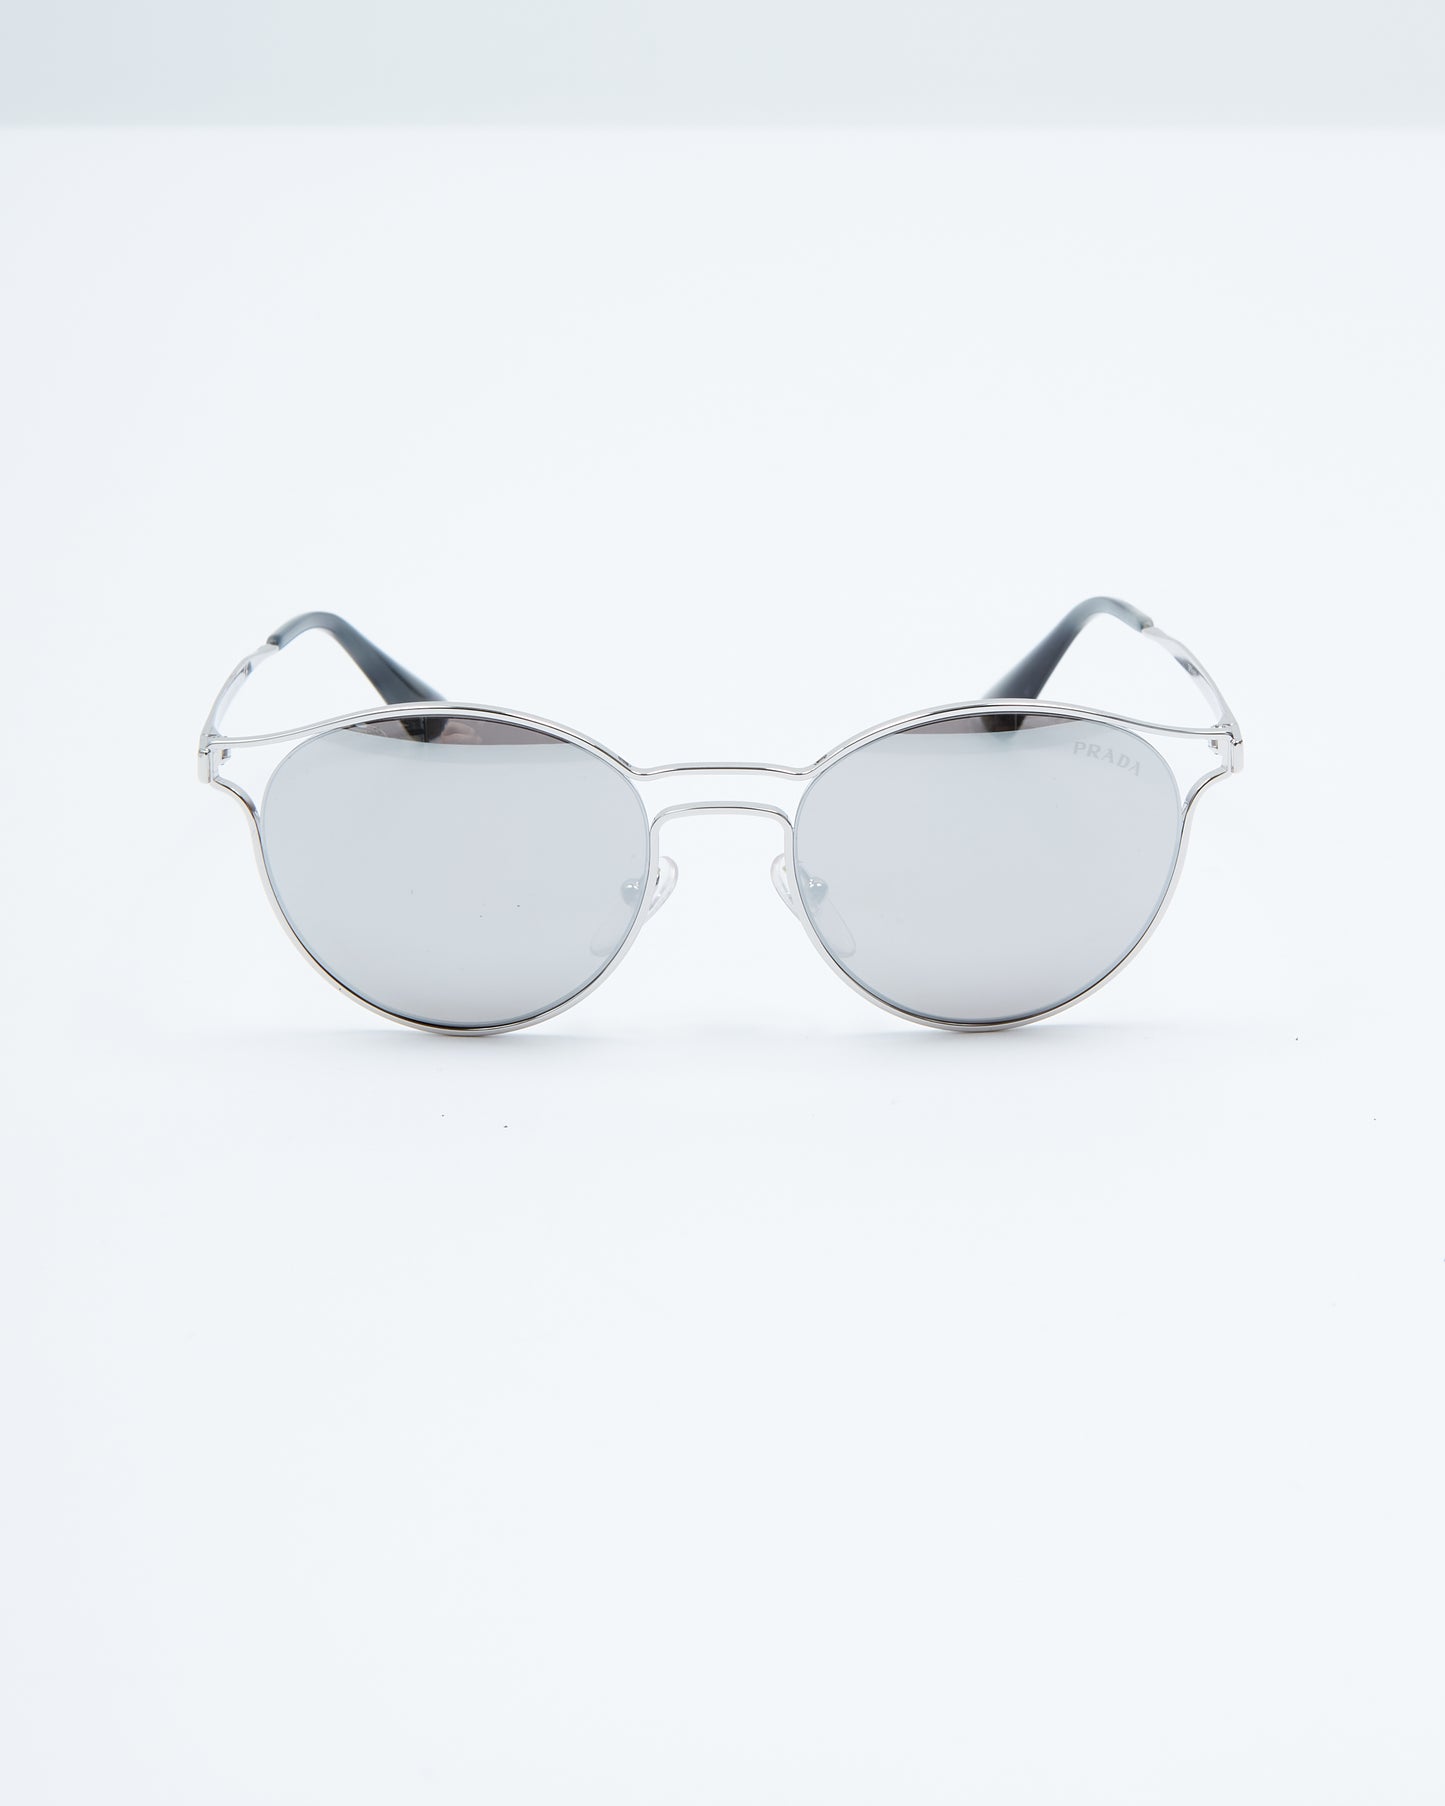 Prada Silver Round SPR625 Sunglasses